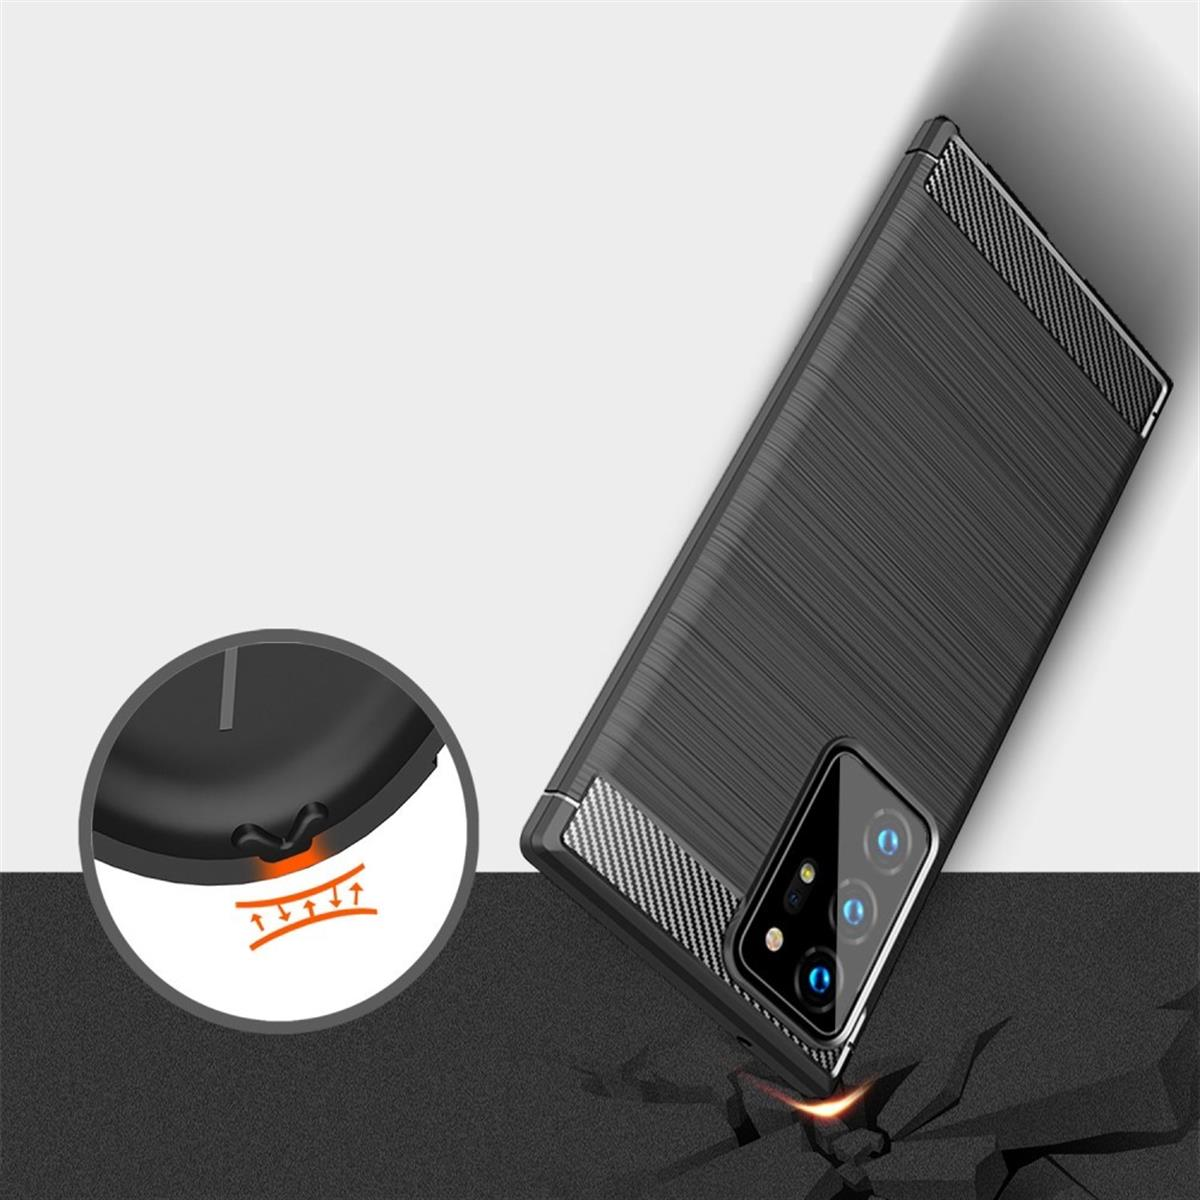 Backcover, Note20 Look, COVERKINGZ Samsung, Carbon im Galaxy Handycase schwarz Ultra,